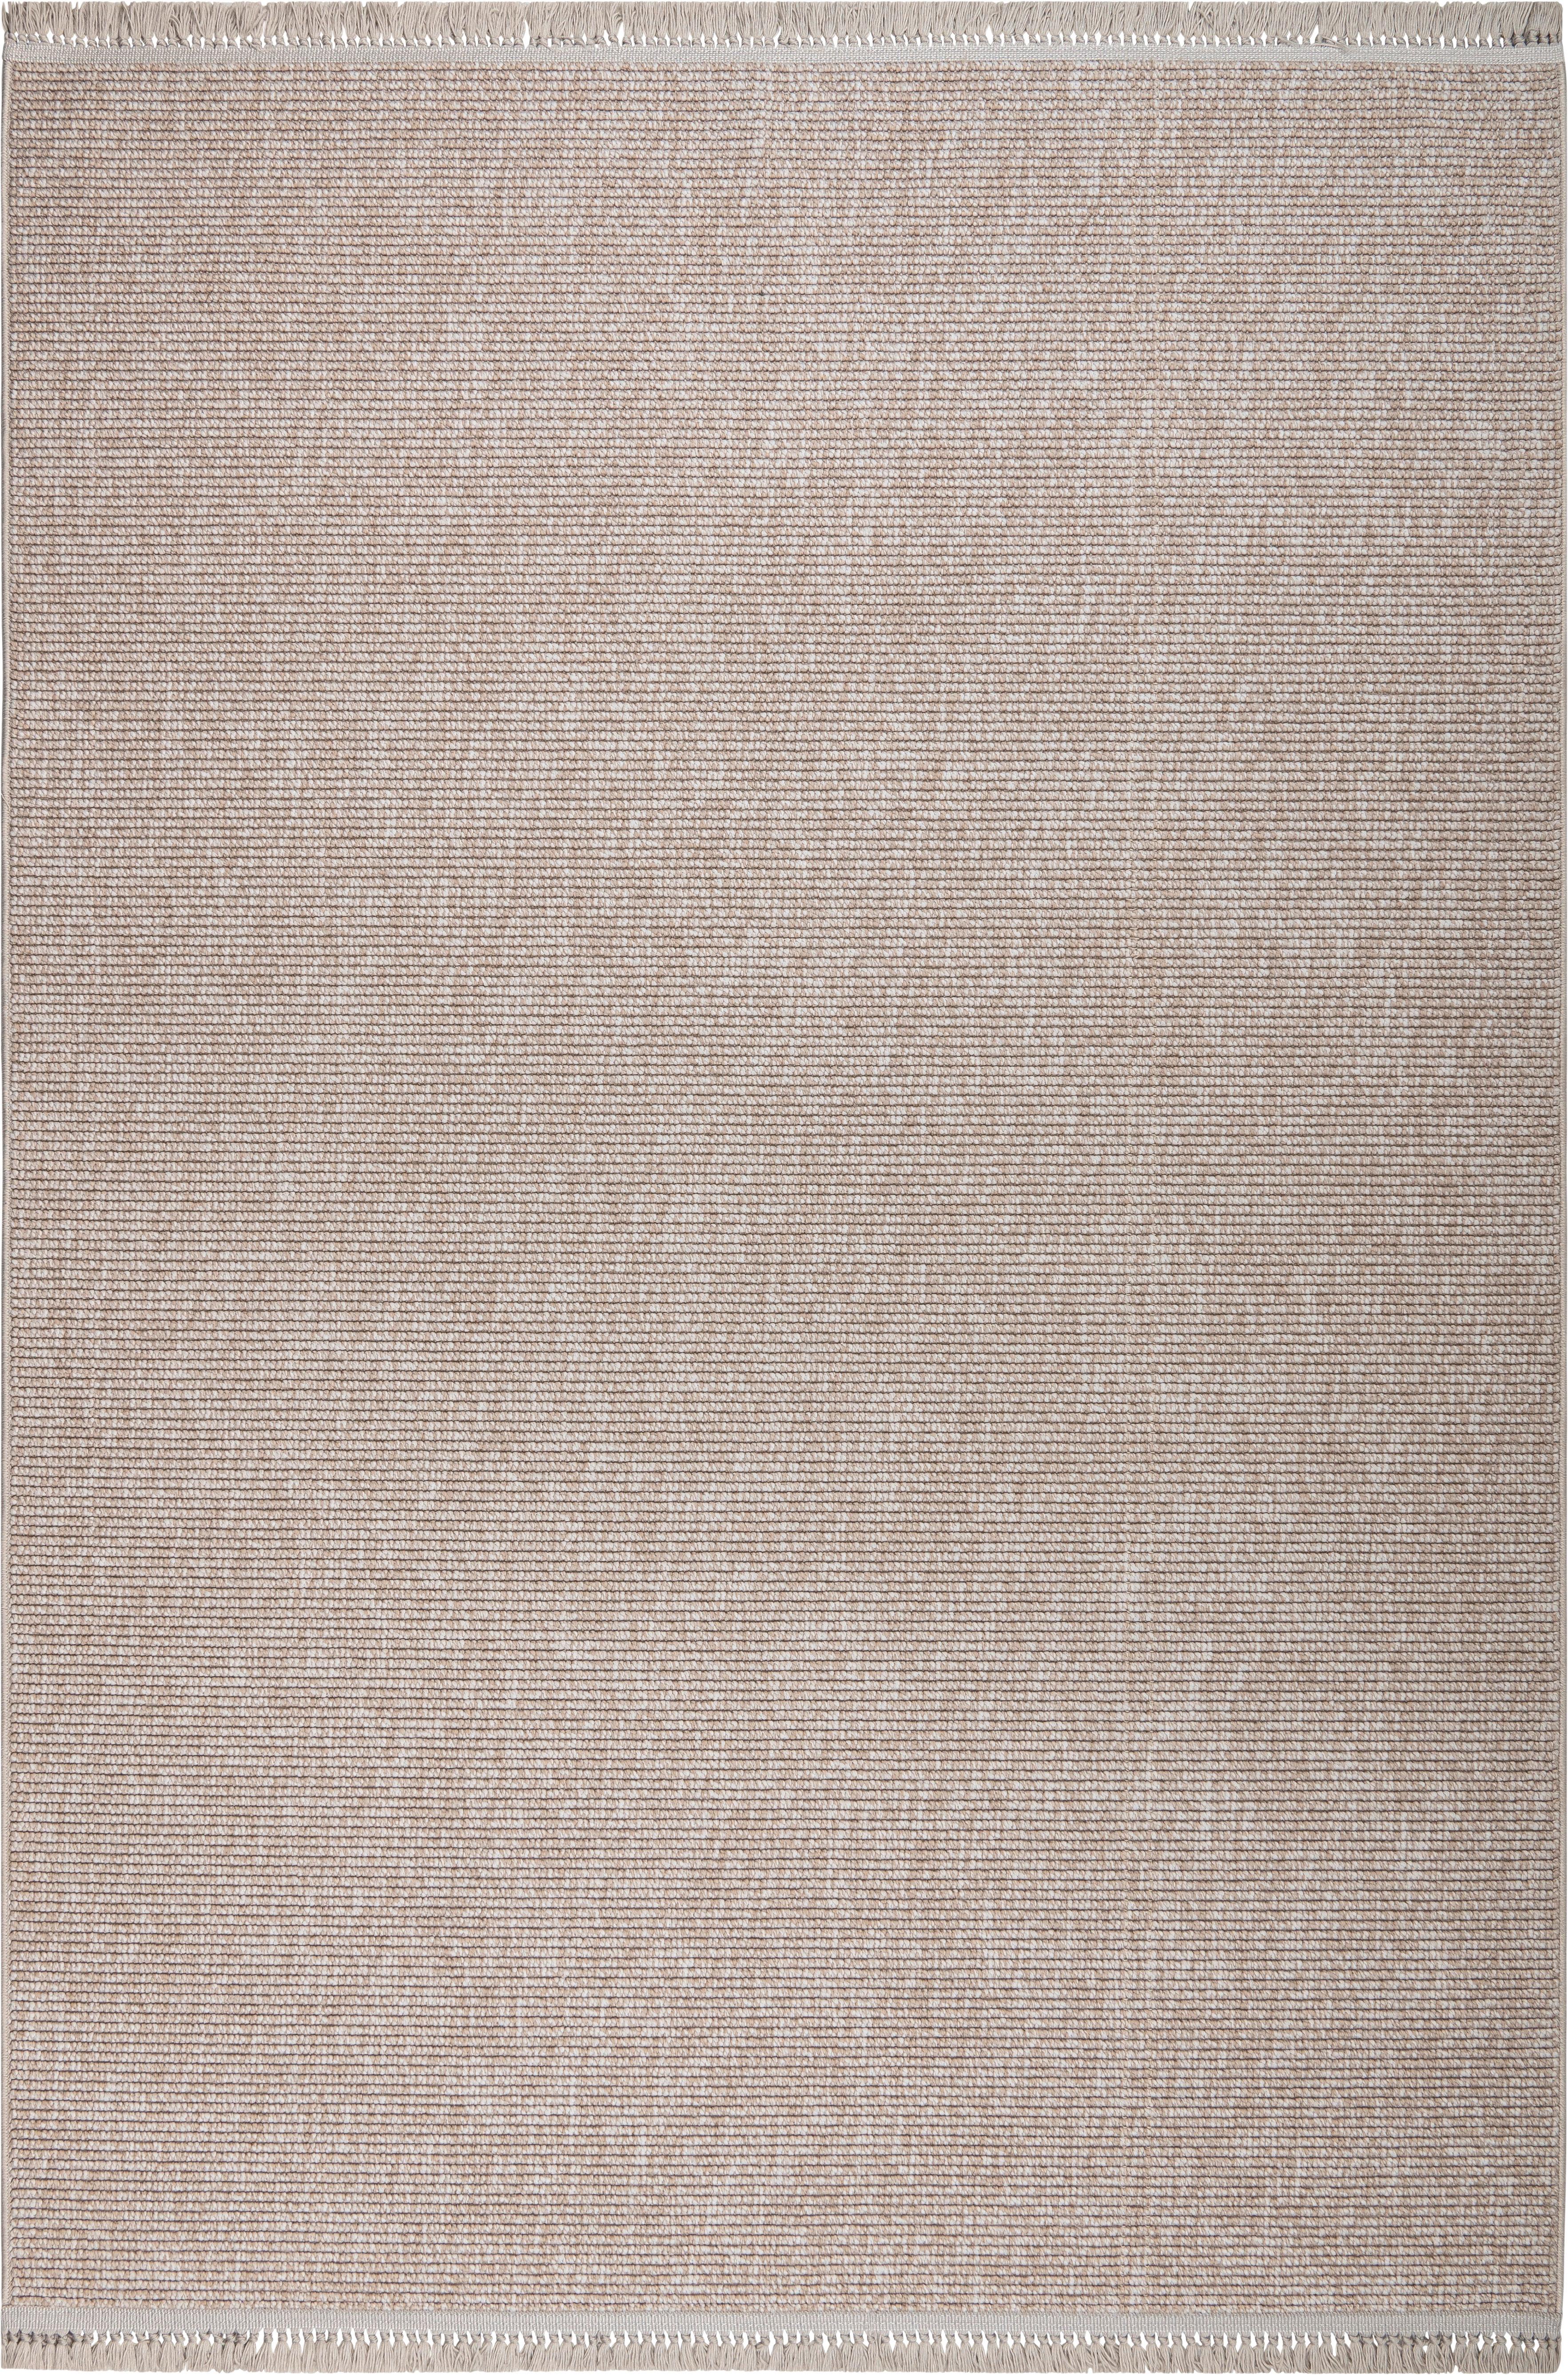 Webteppich Beige Lucia 160x230 cm - Beige, ROMANTIK / LANDHAUS, Textil (160/230cm) - James Wood